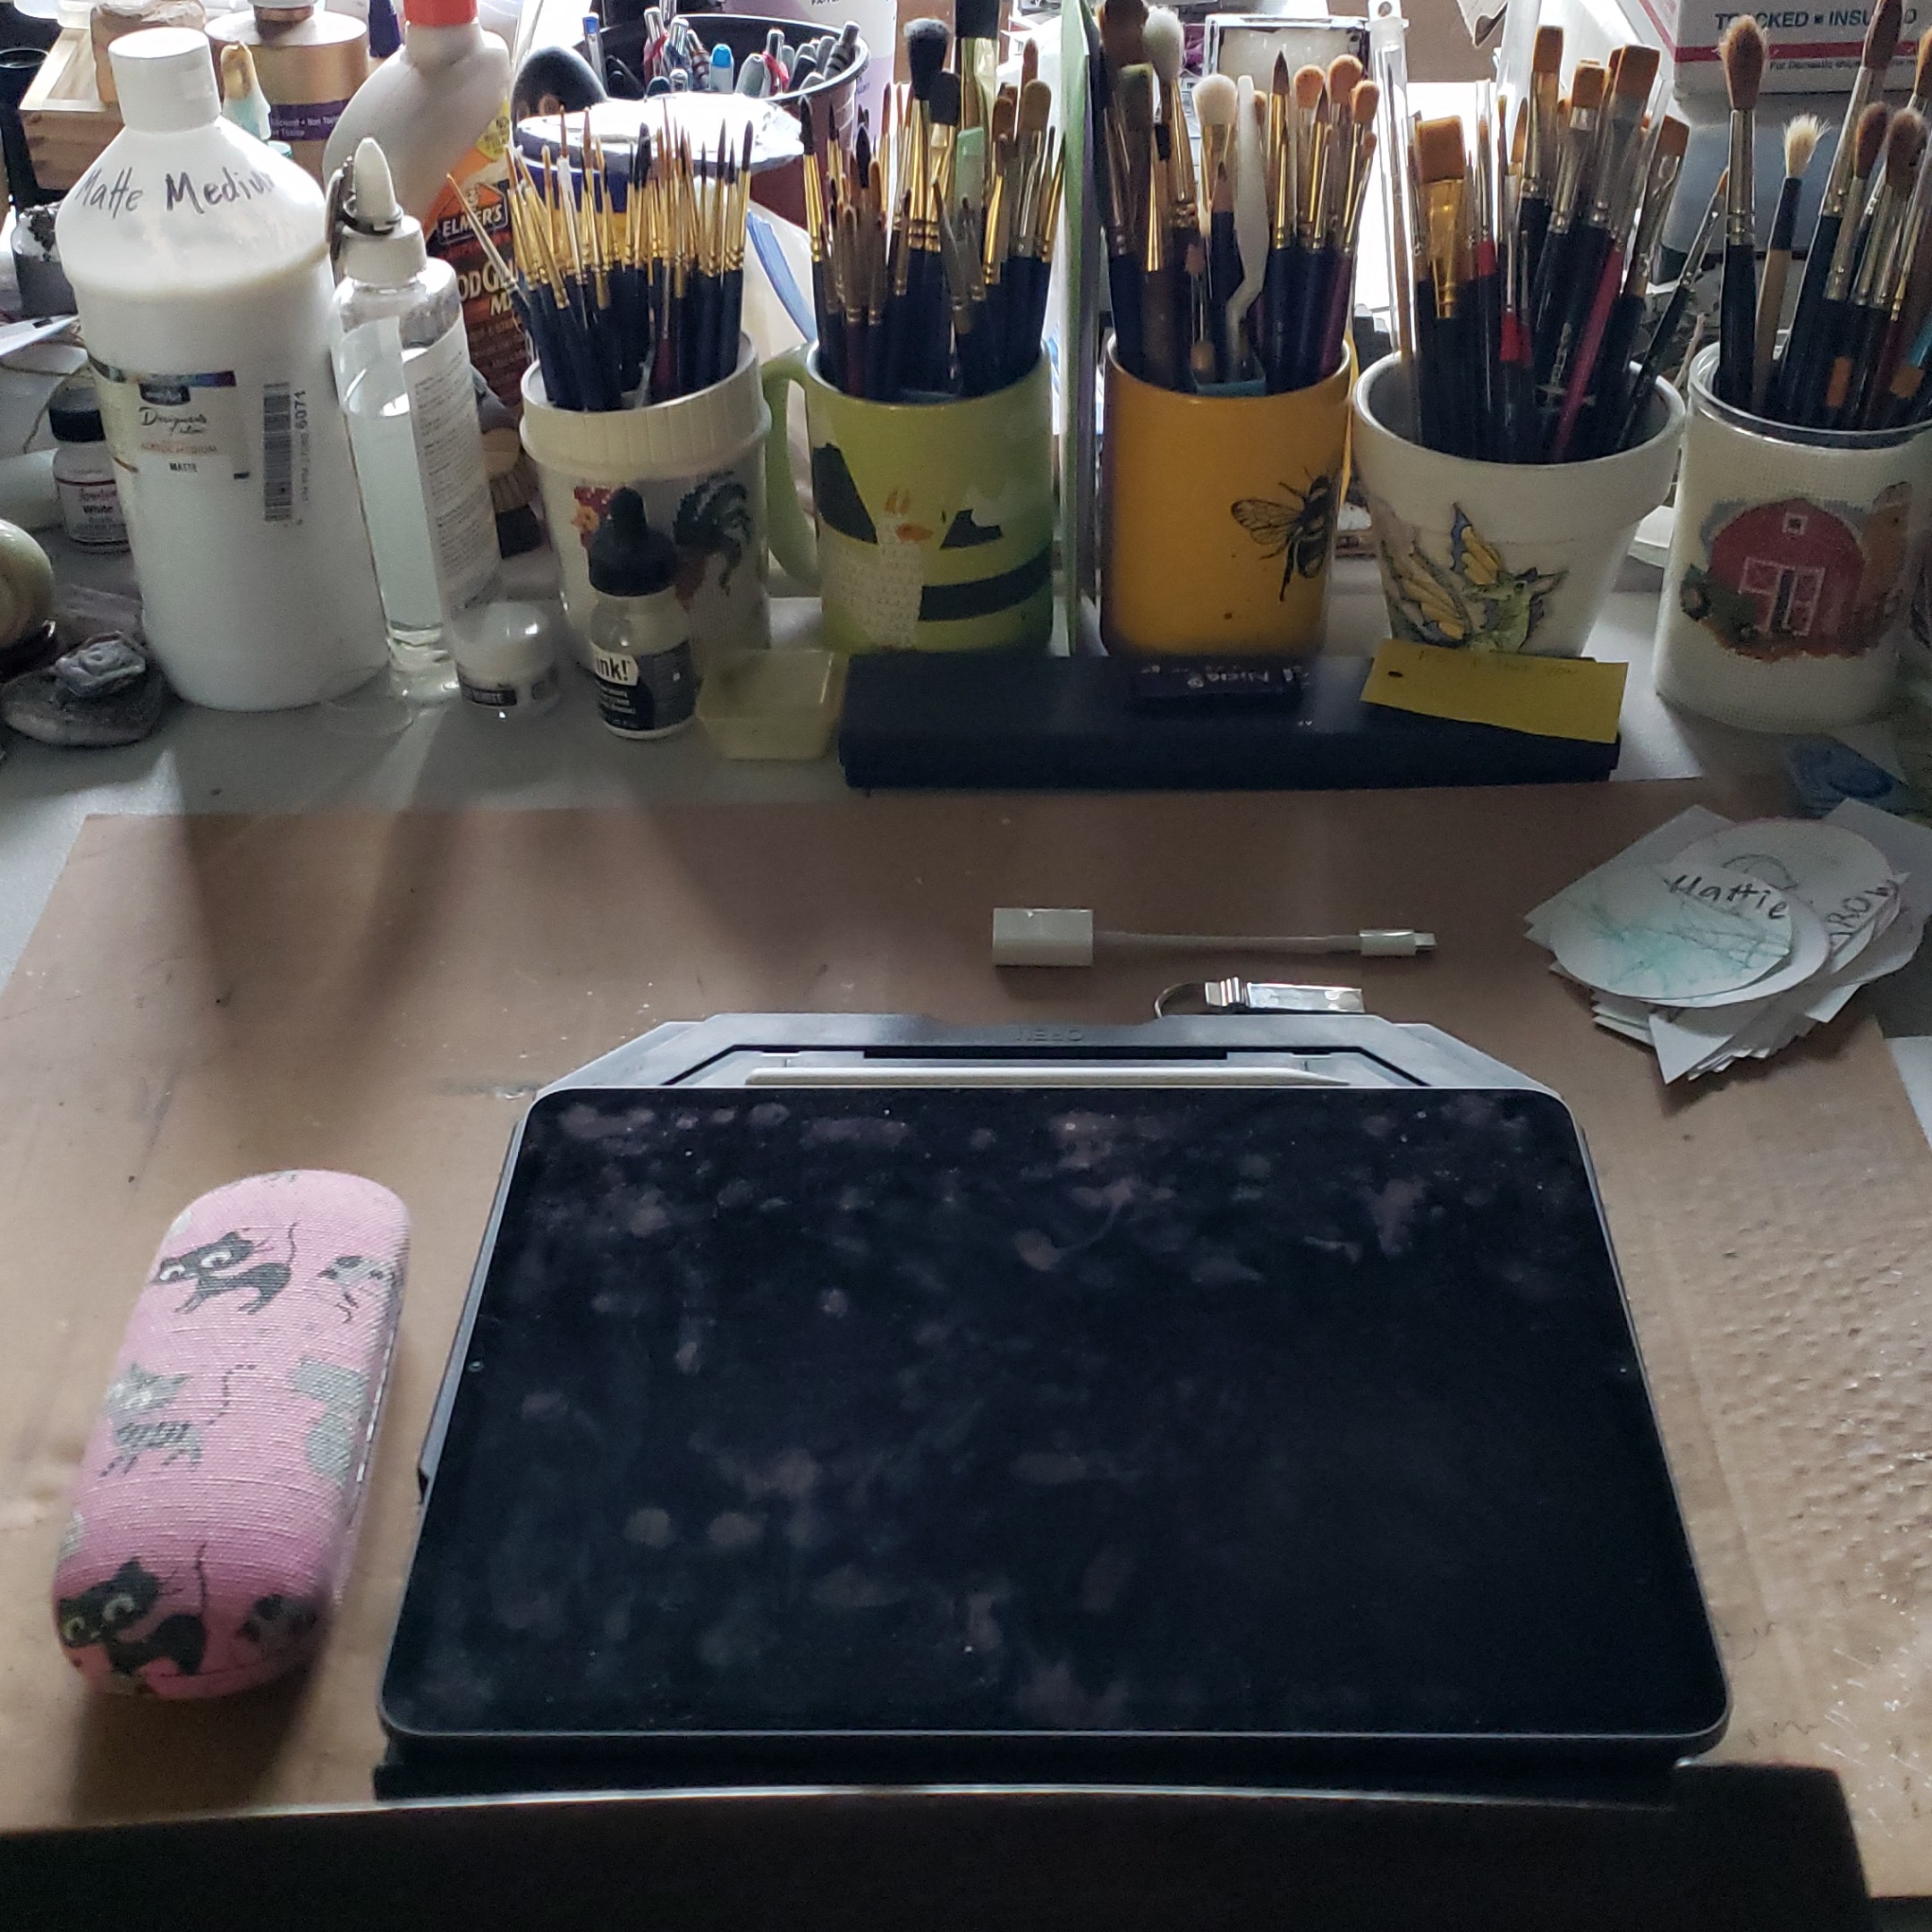 An iPad, Procreate, and Art Supplies